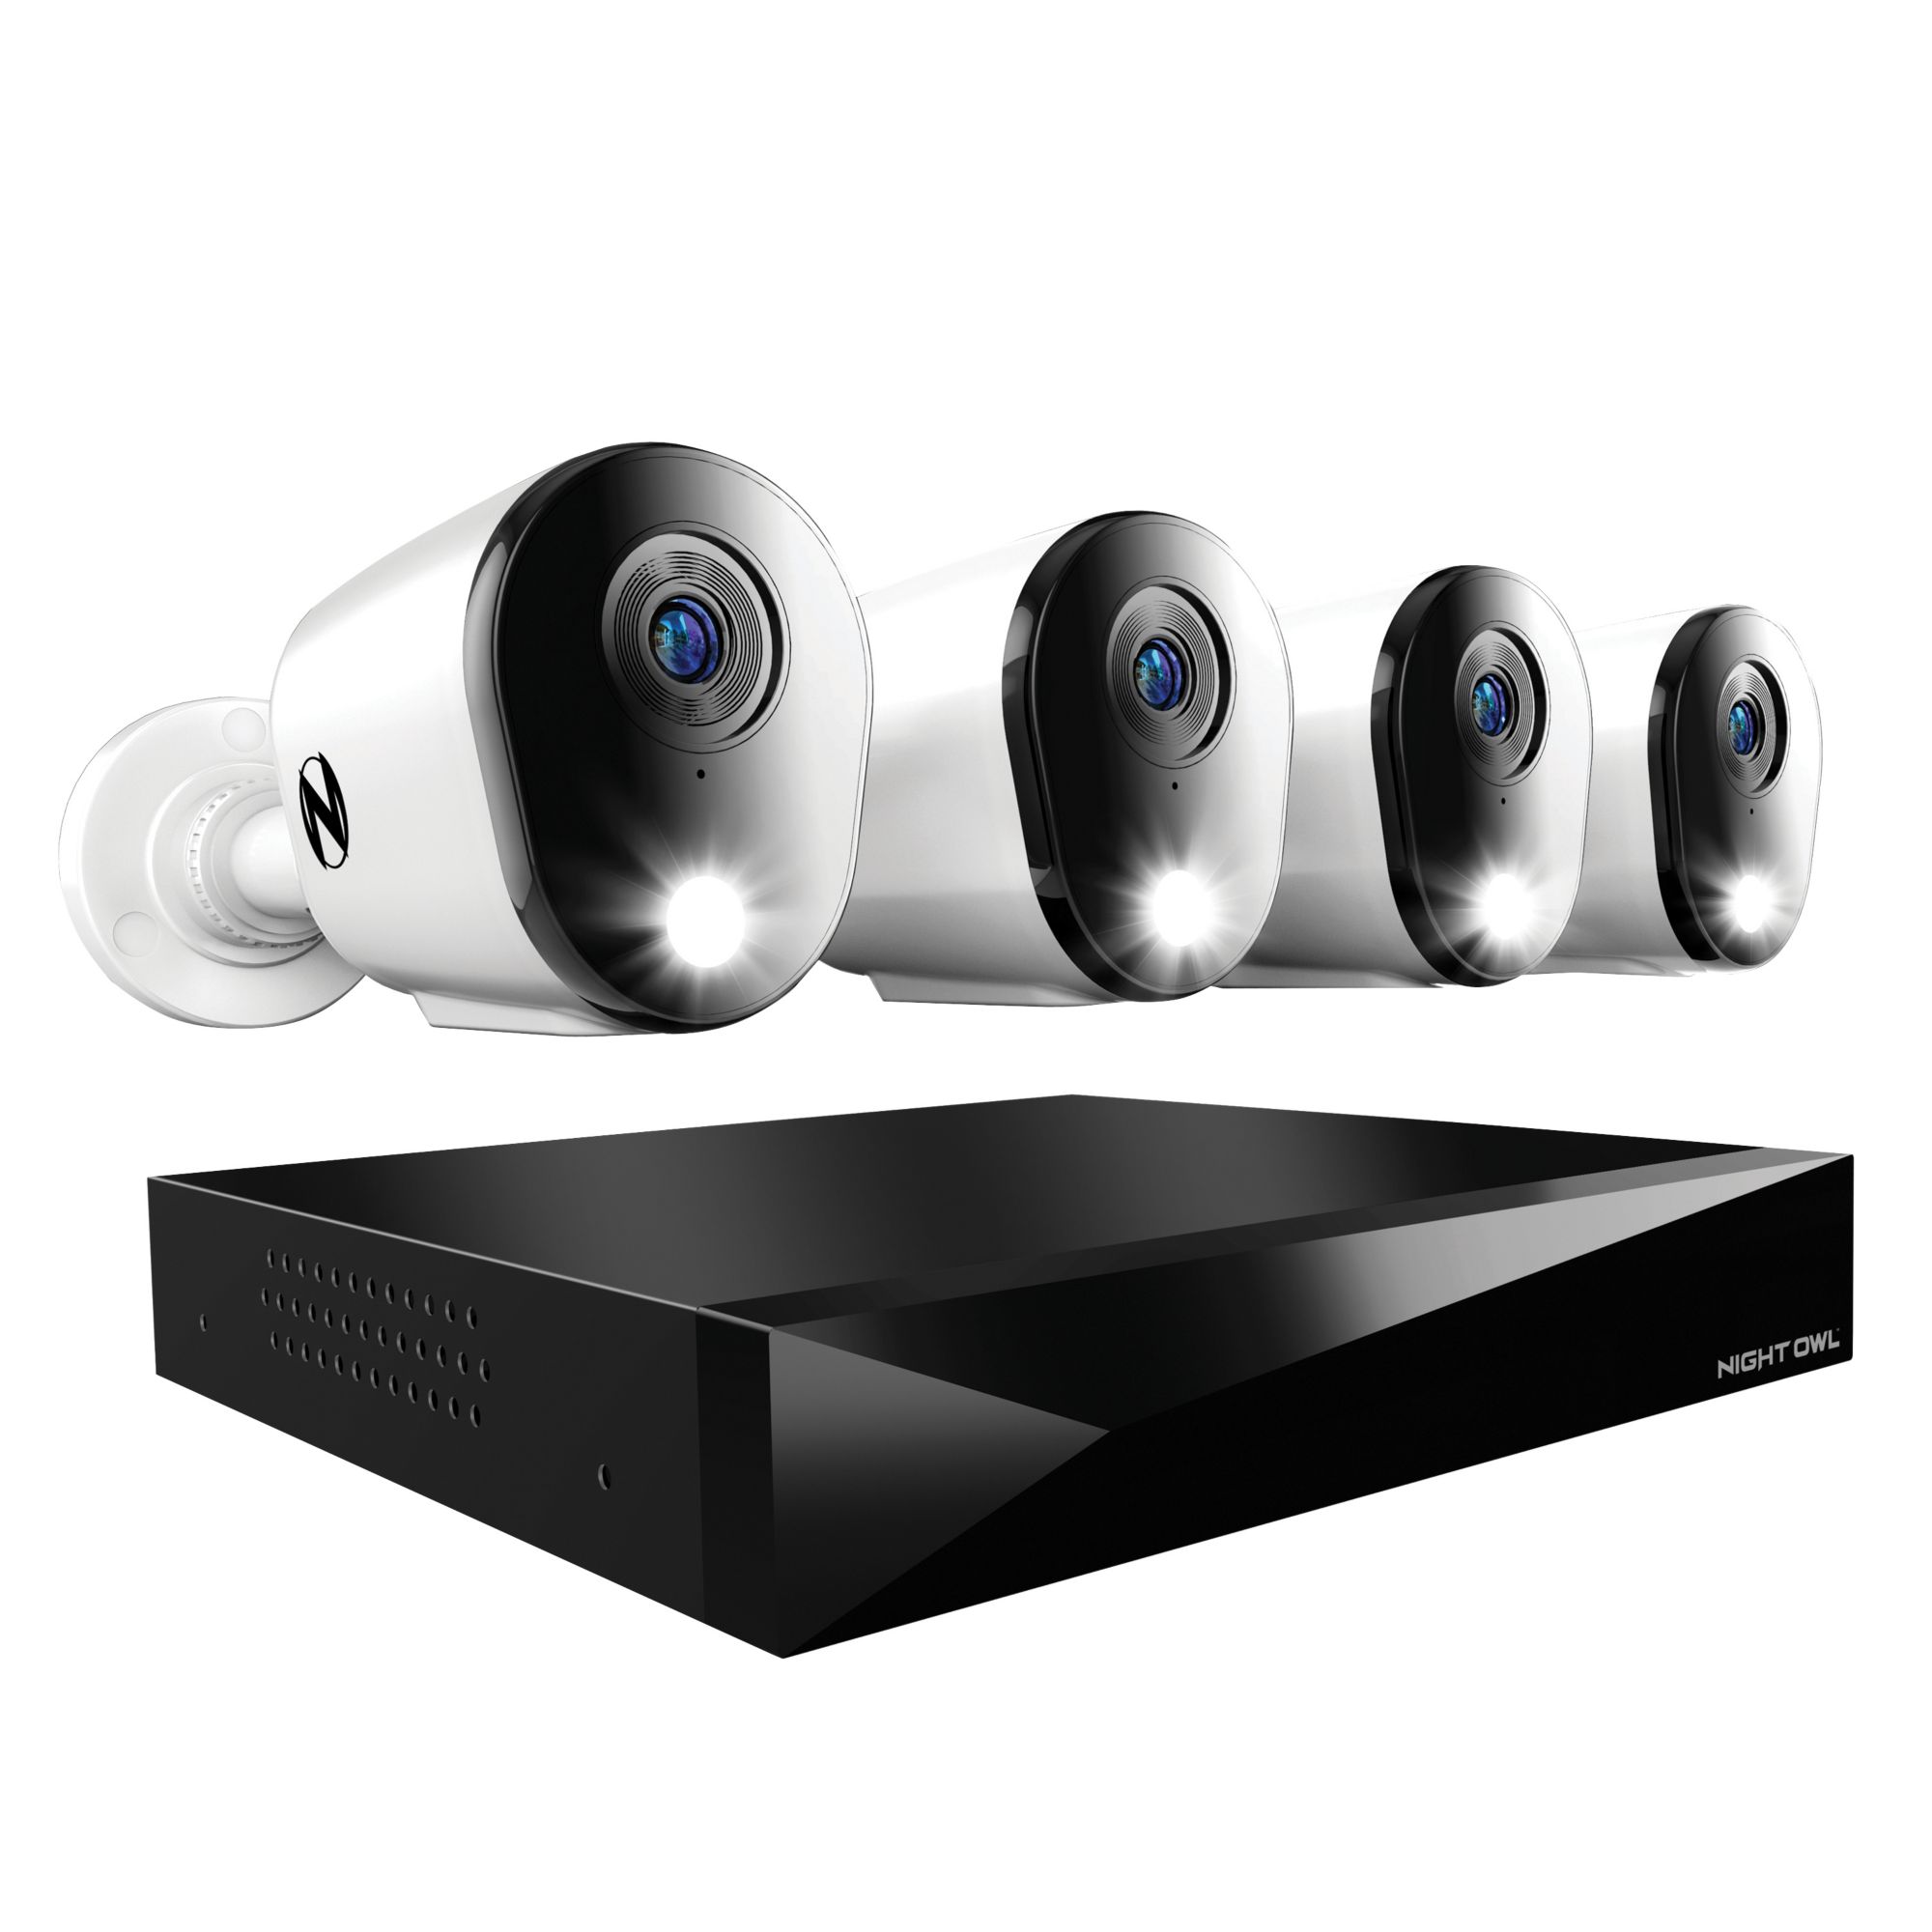 Best security camera deal: Get 4 Blink Mini indoor cameras for 54